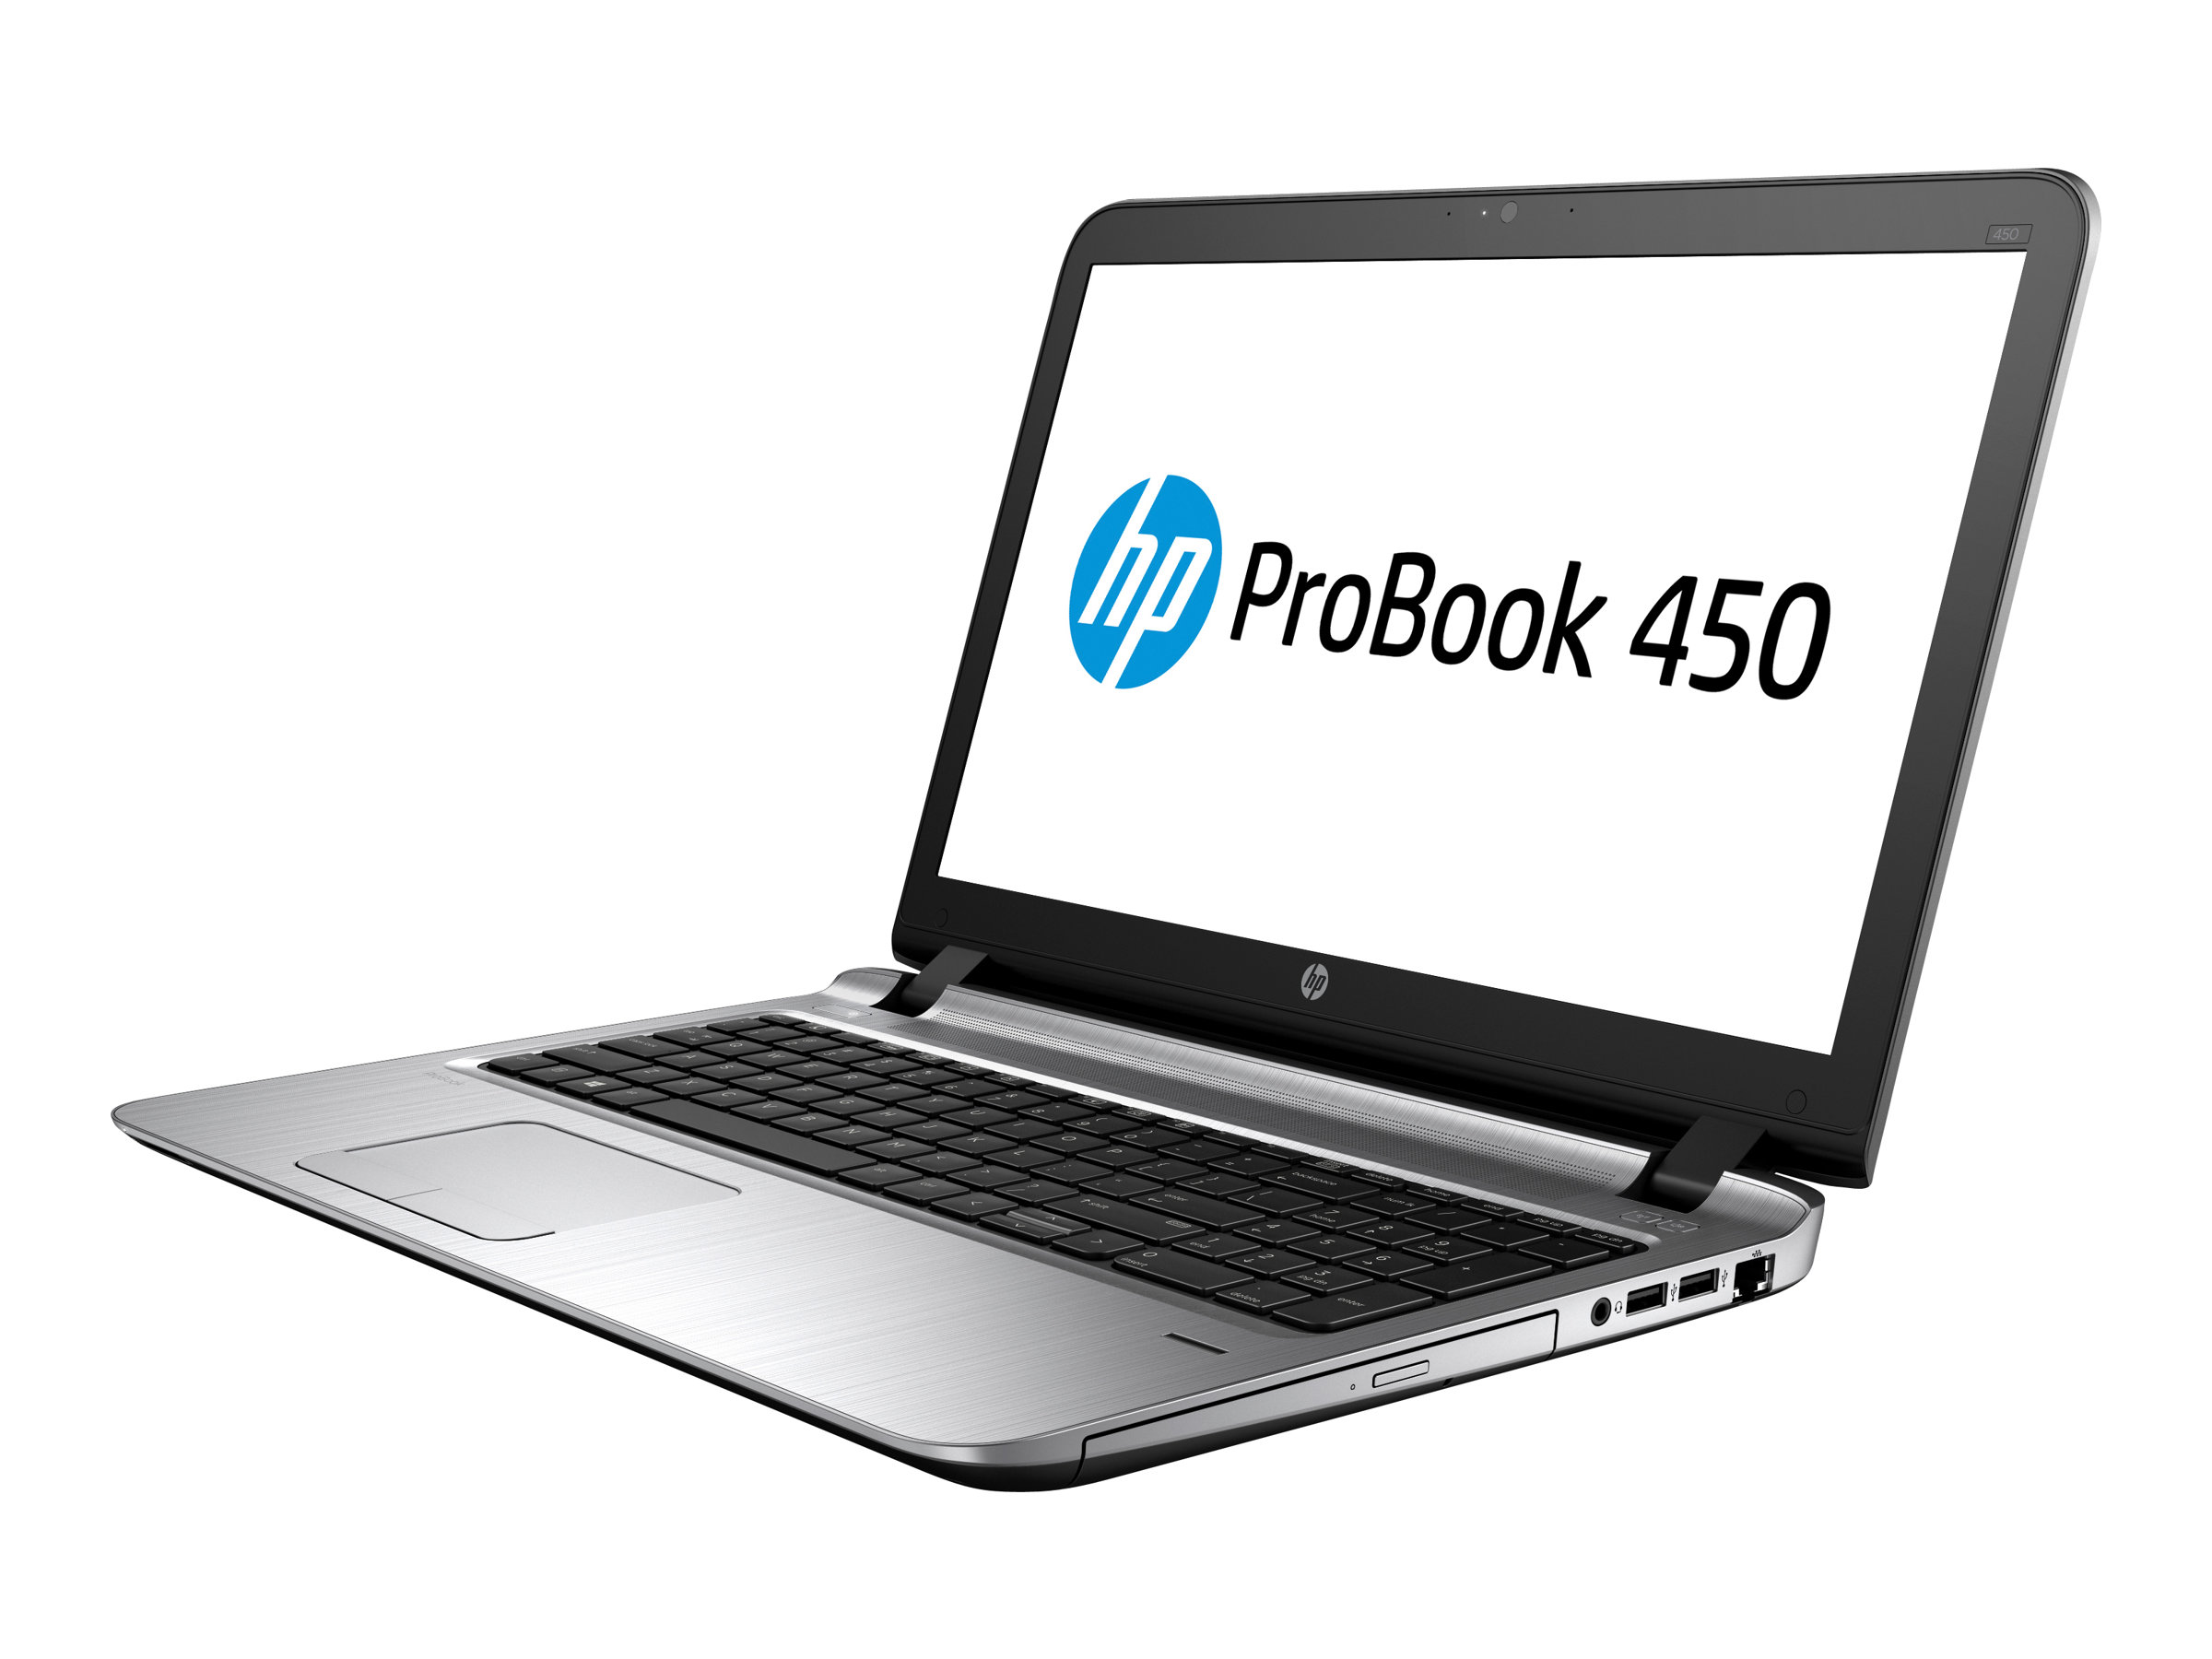 Aftrekken Bedankt Contour HP ProBook 450 G3 - Core i5 6200U / 2.3 GHz | texas.gs.shi.com